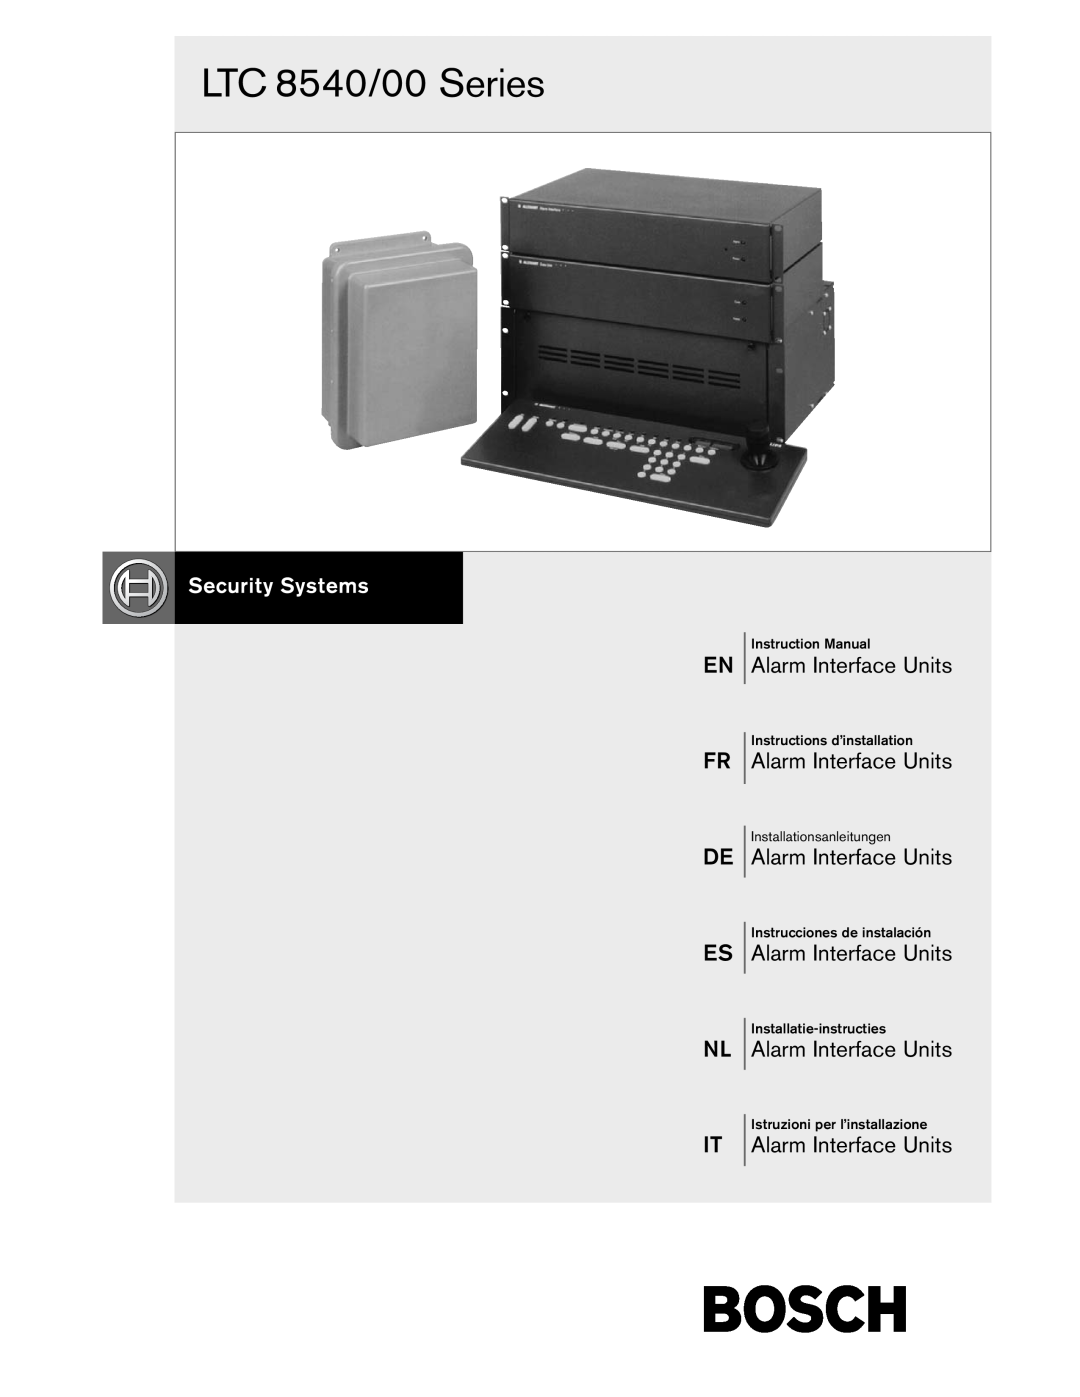 Bosch Appliances instruction manual LTC 8540/00 Series, EN Alarm Interface Units, FR Alarm Interface Units 